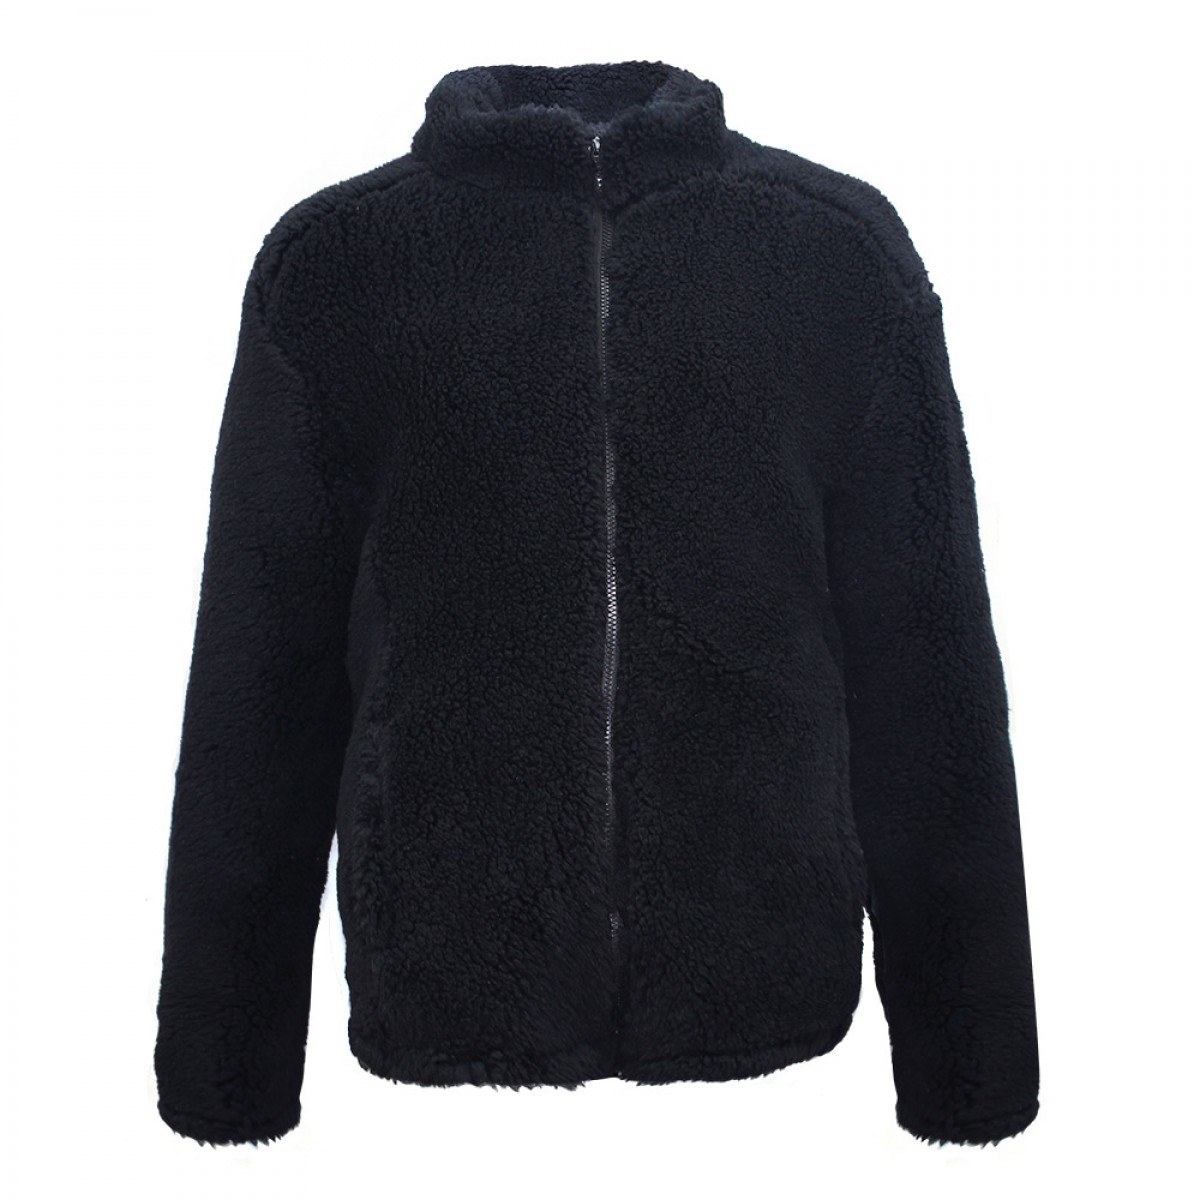 8848-men-sheep-jacket-ksfj95756-8a